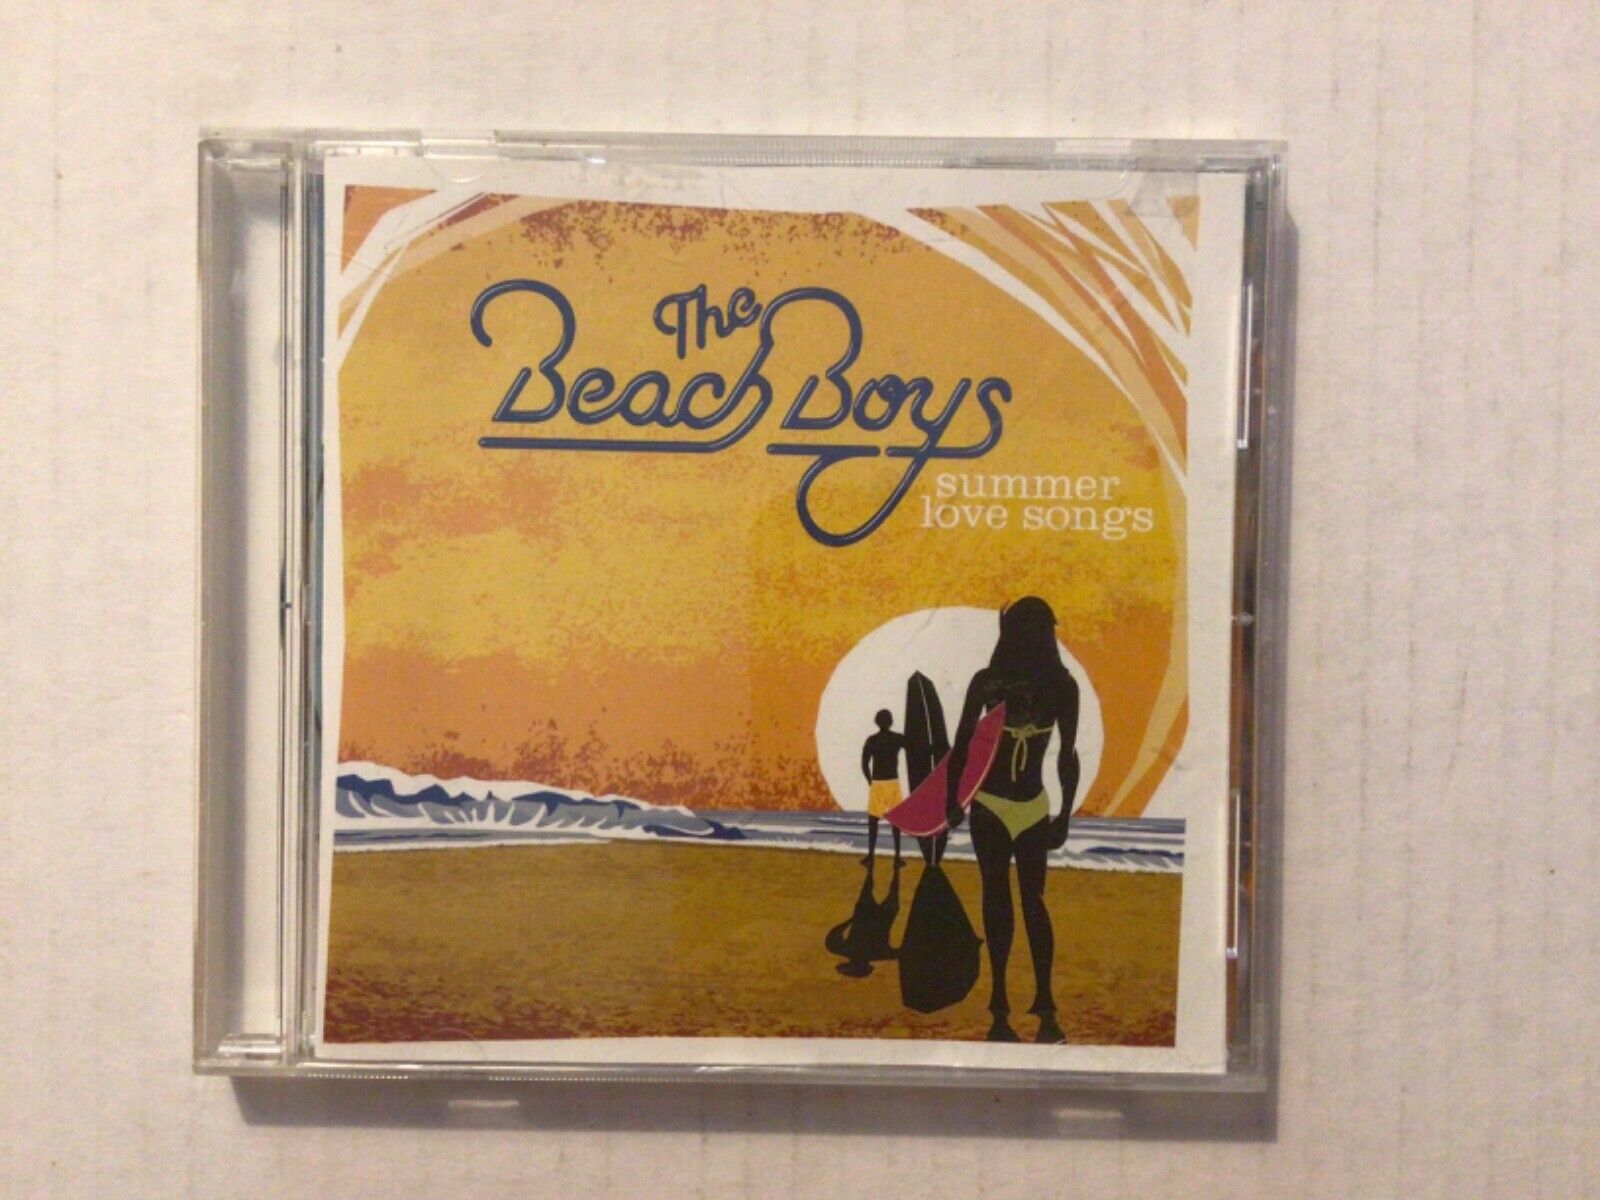 THE BEACH BOYS CD - SUMMER LOVE SONGS - 20 TRACKS BRIAN WILSON NEW STEREO MIXES